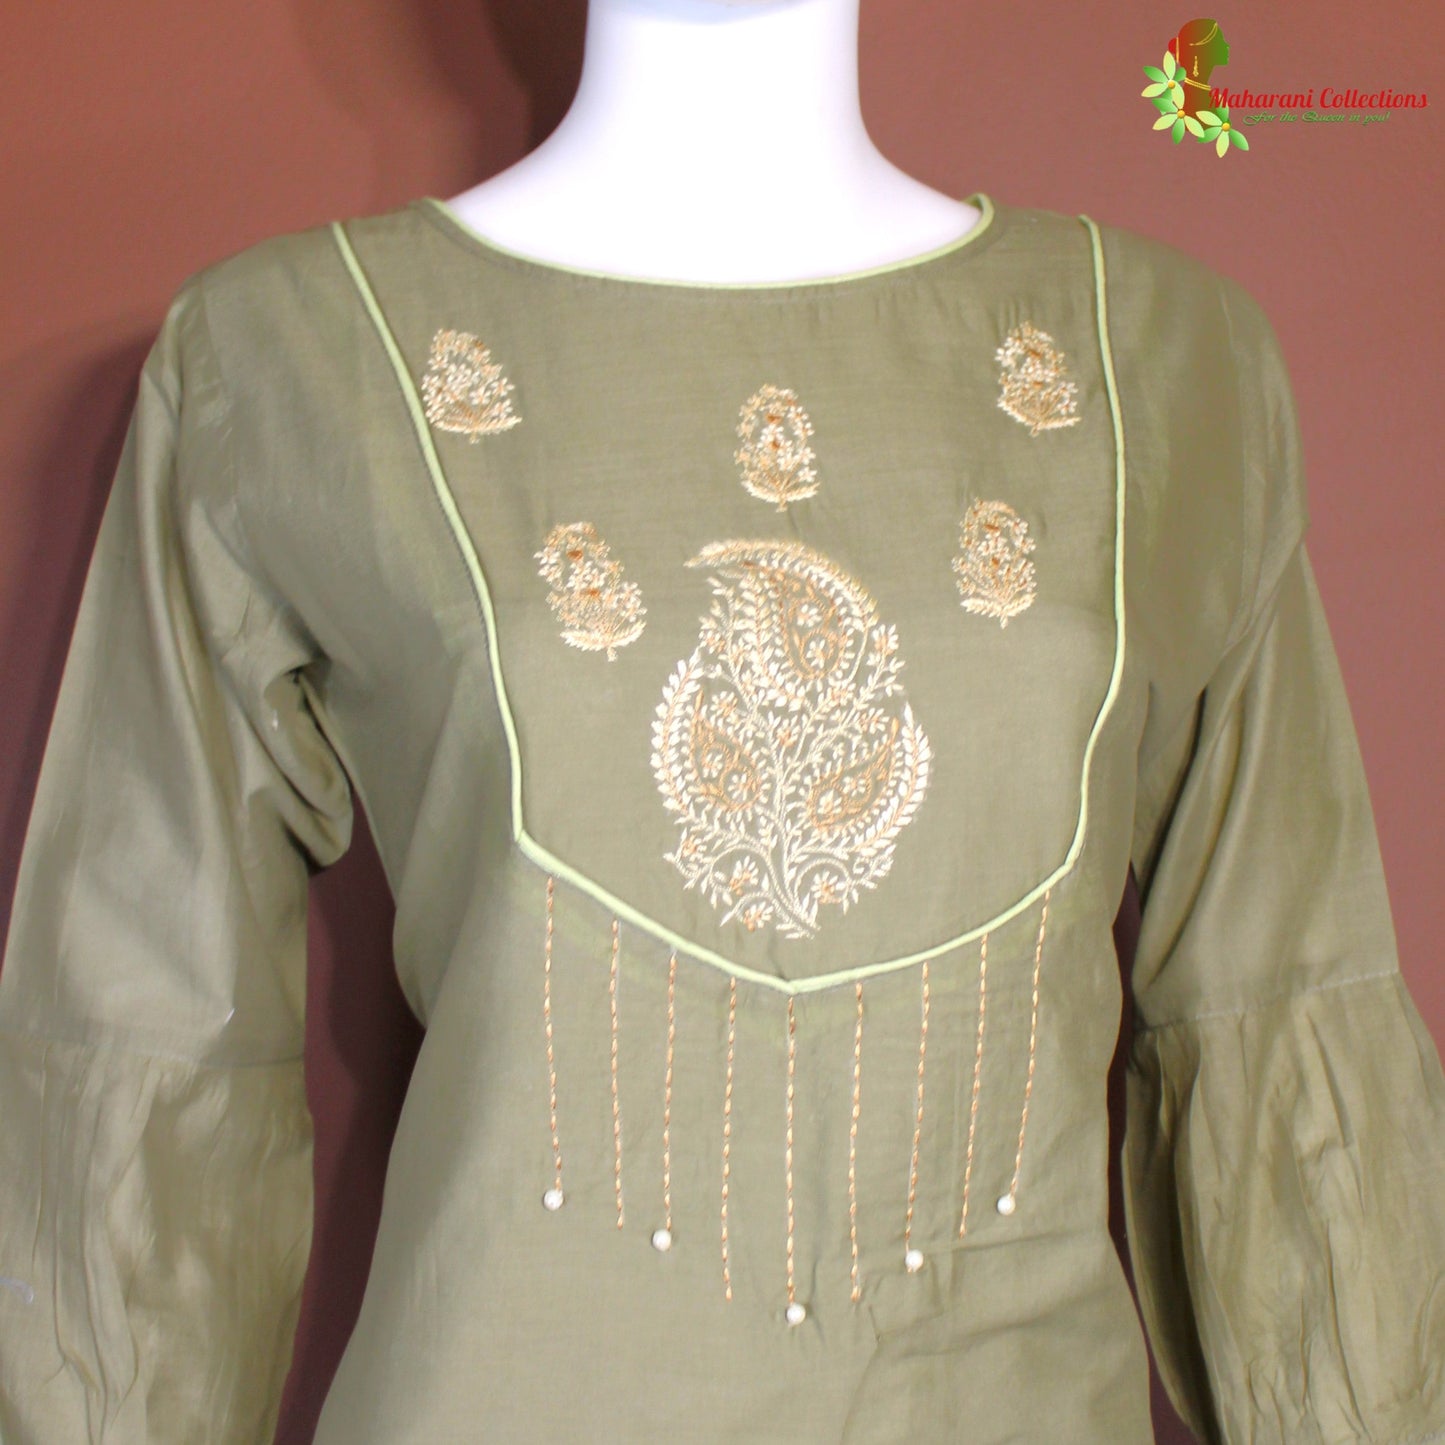 Maharani's Long Dress - Soft Cotton - Olive Green (M)